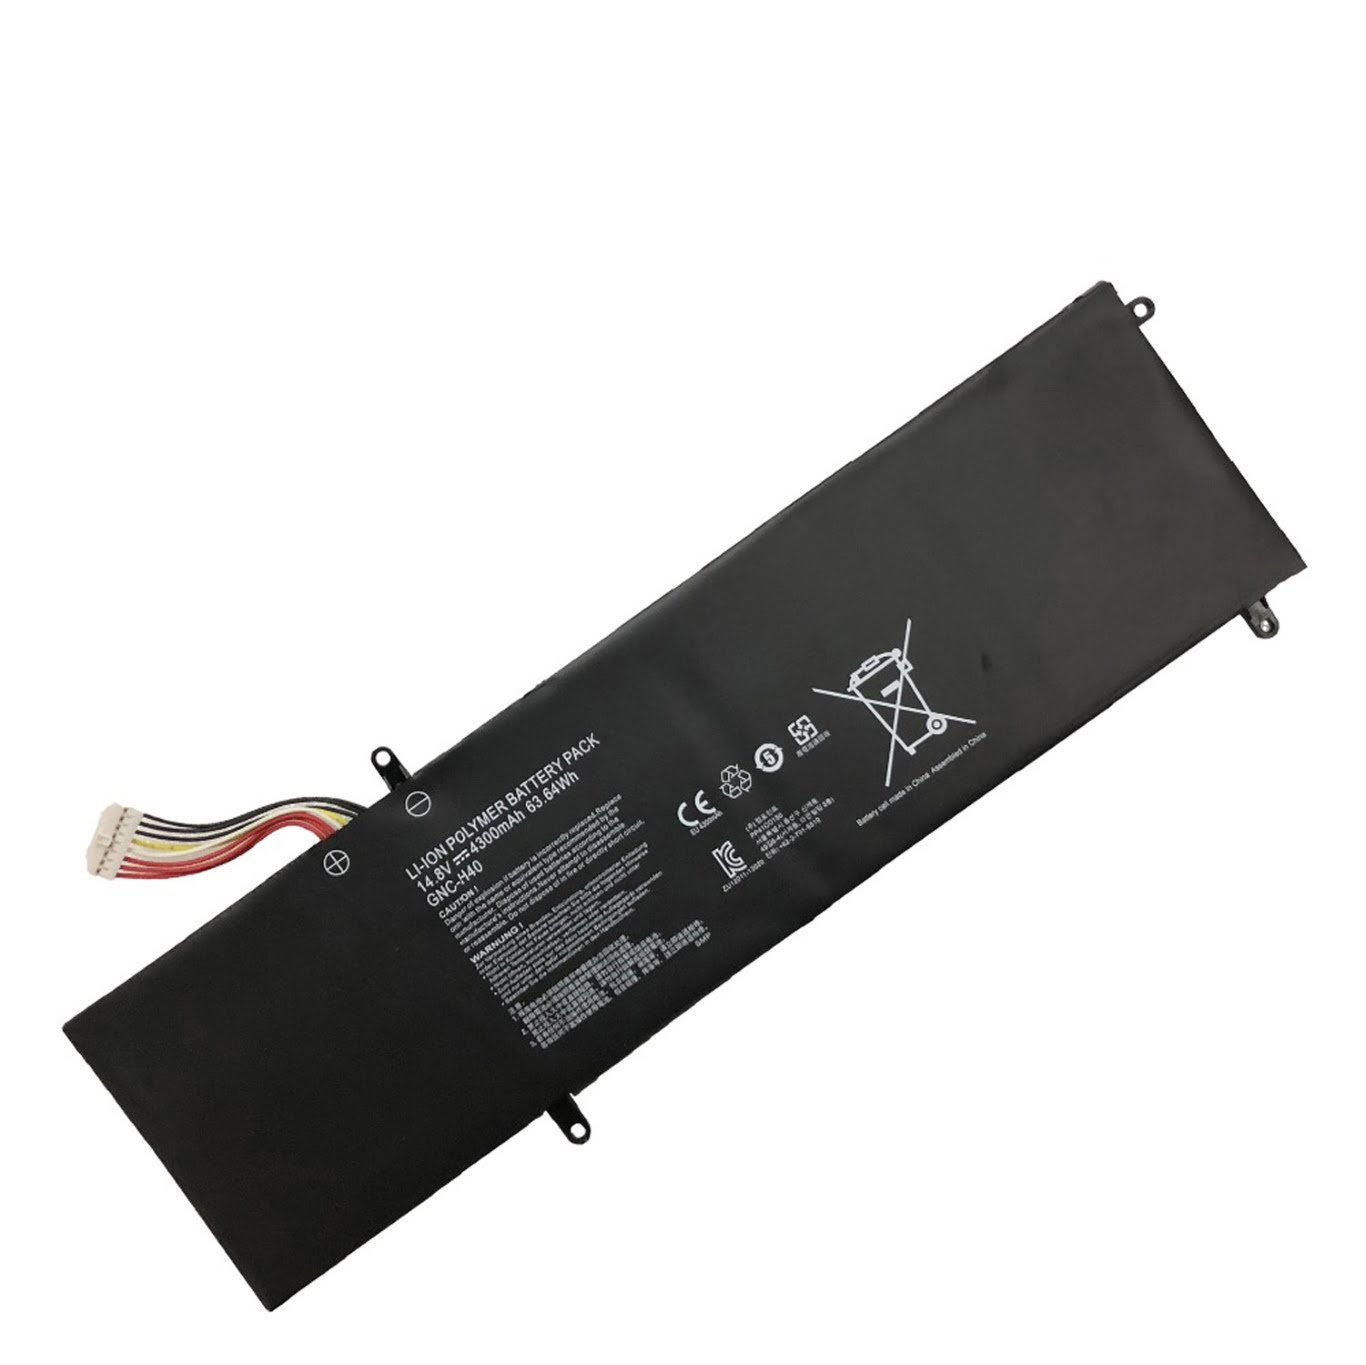 Gigabyte Gnc-h40 Laptop Battery For P34, V2 replacement